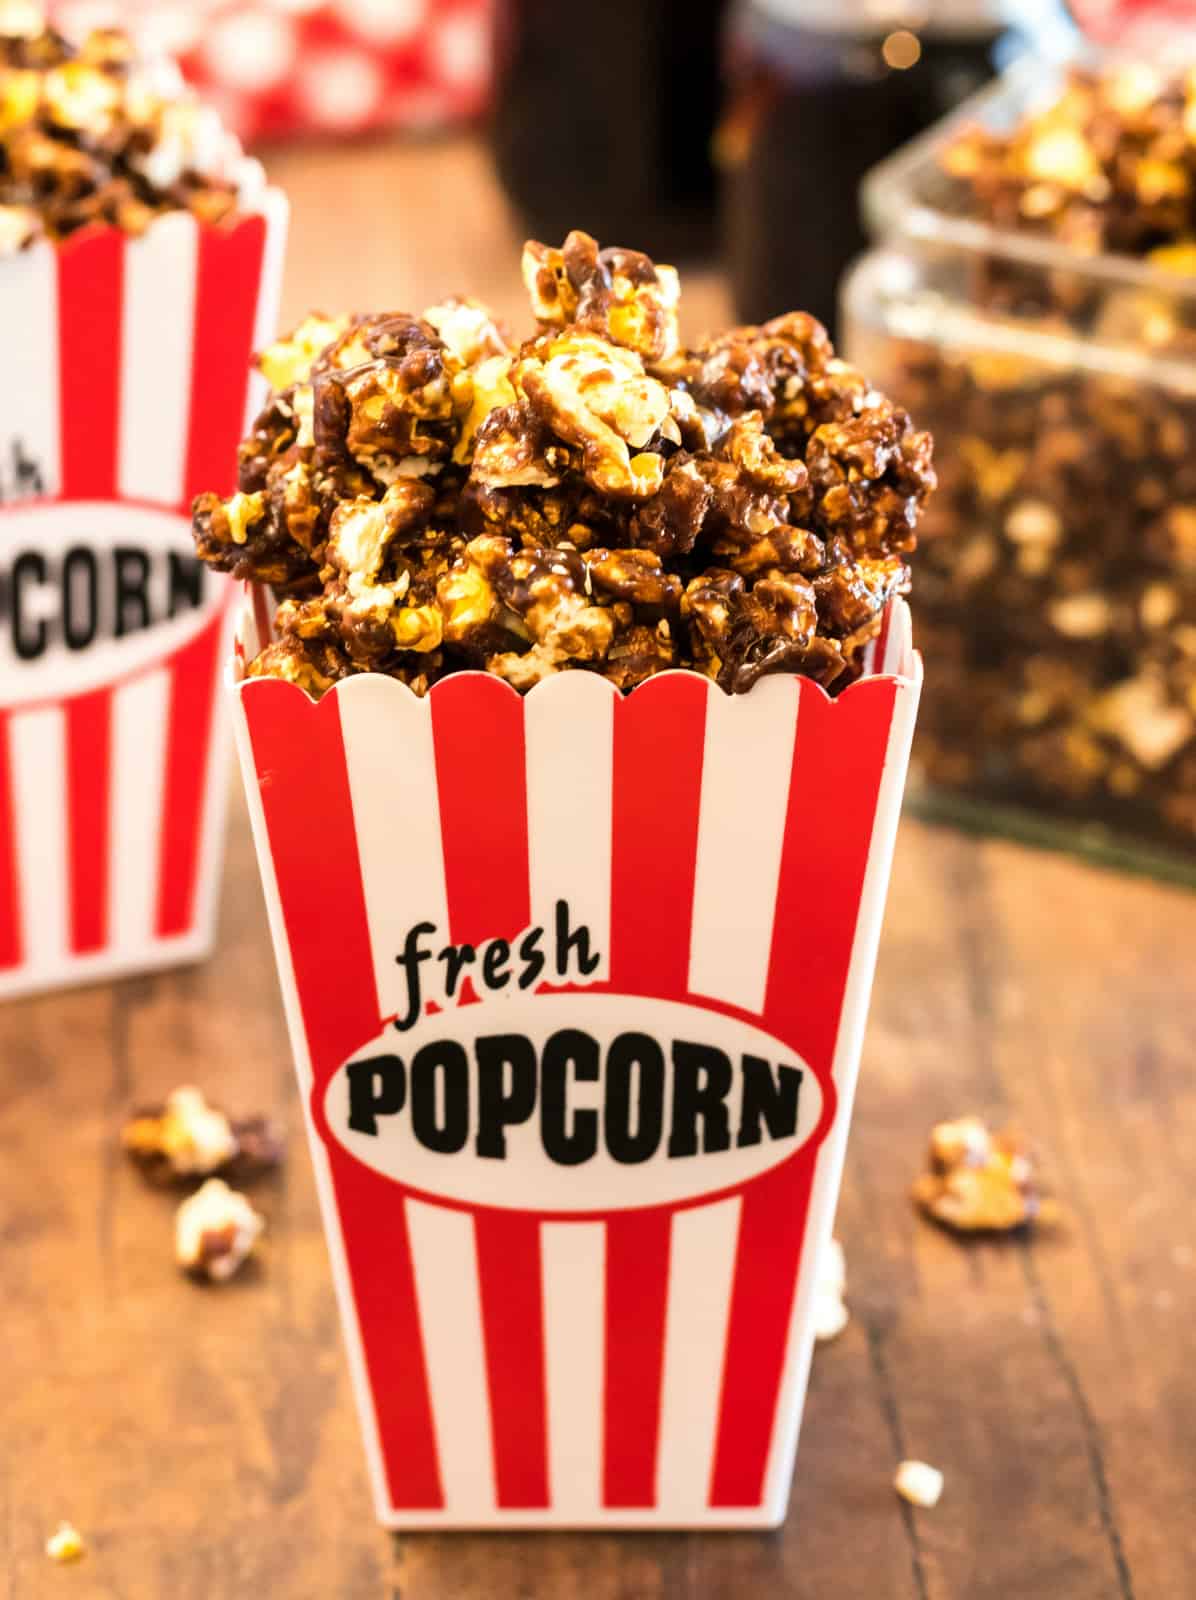 Chocolate Popcorn in Popcorn bucket